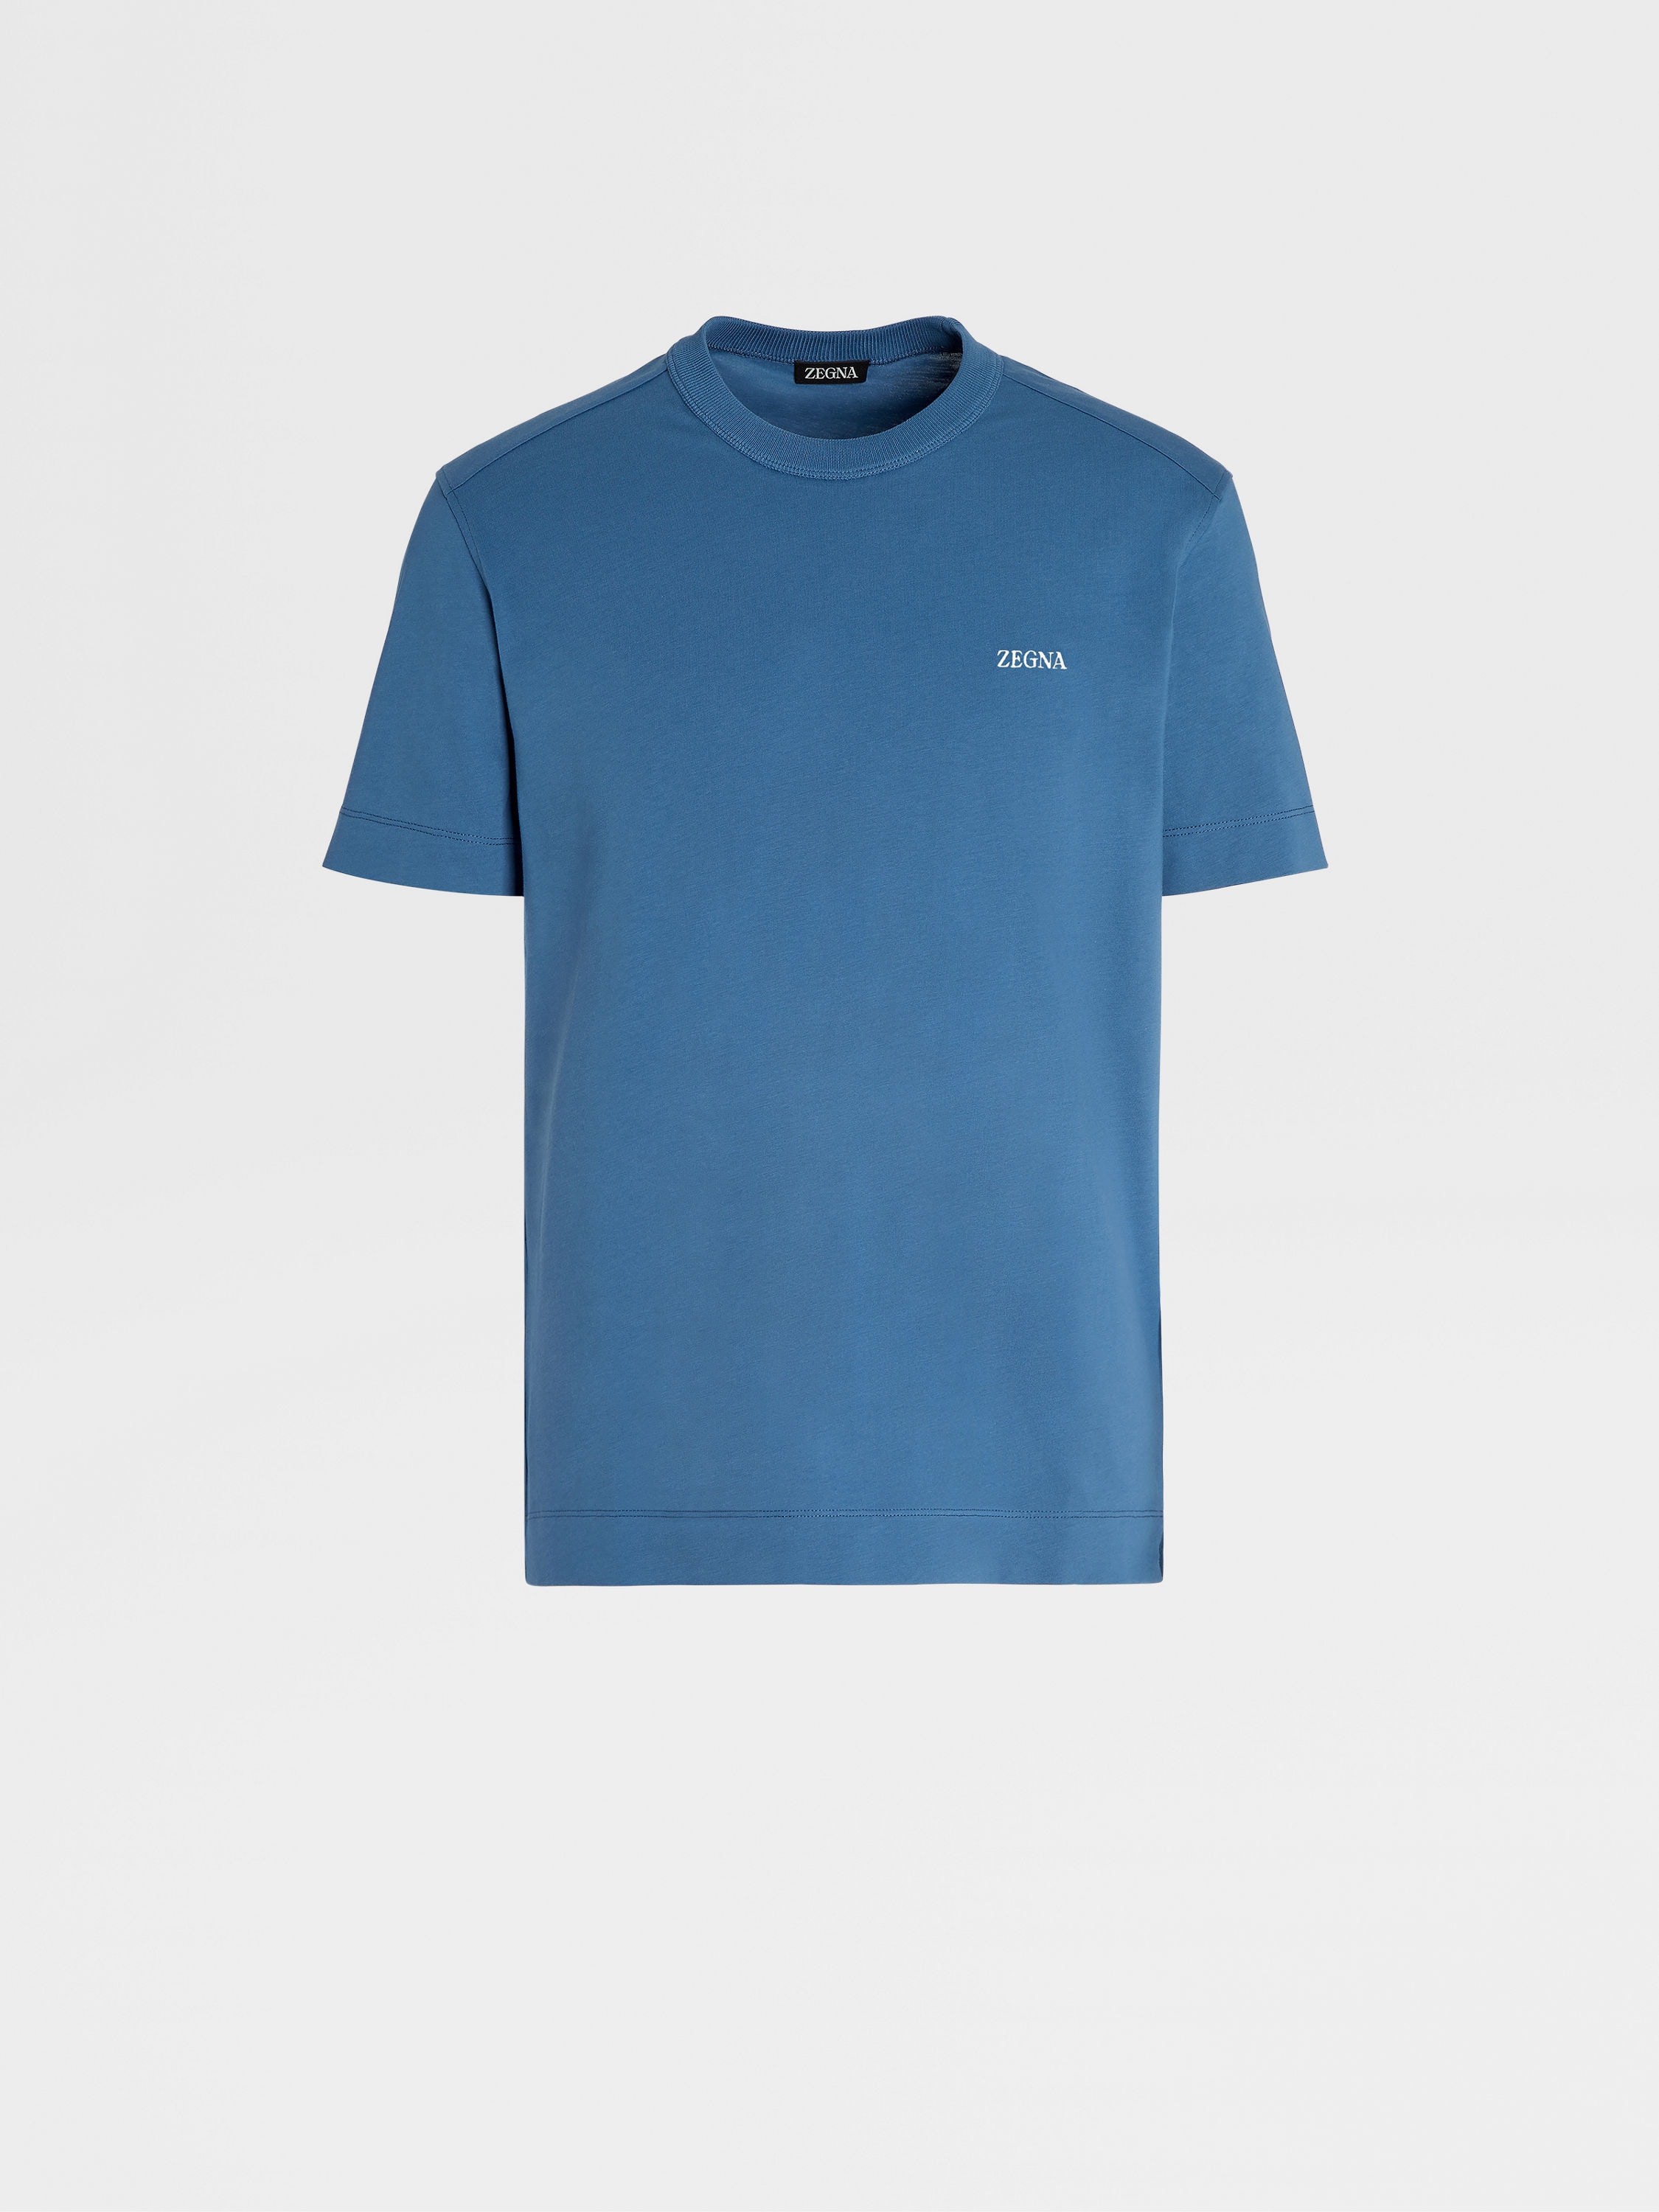 Teal Blue Pure Cotton Short-sleeve T-shirt